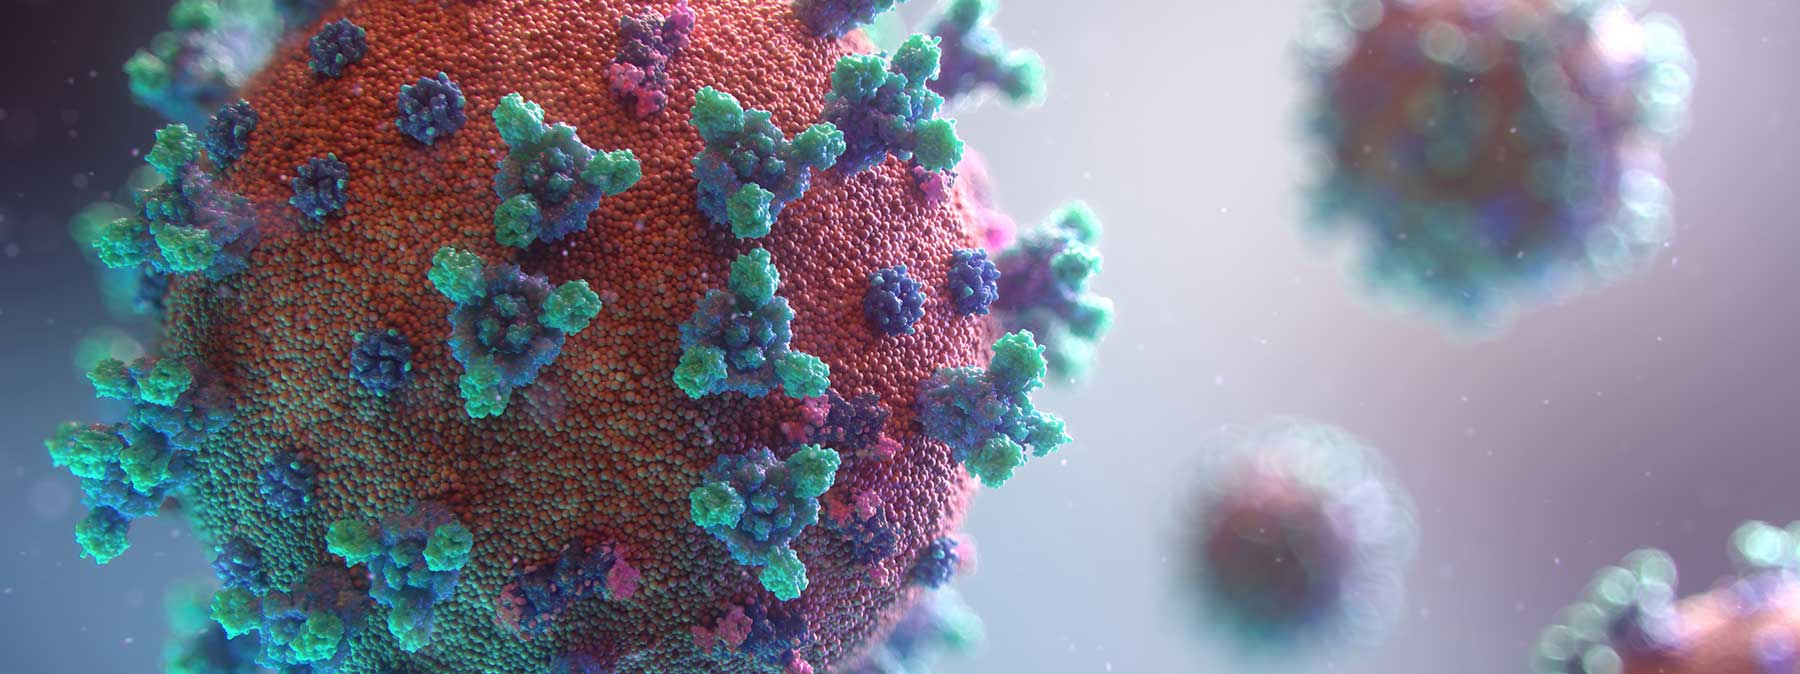 microscoping rendering of the coronavirus cells